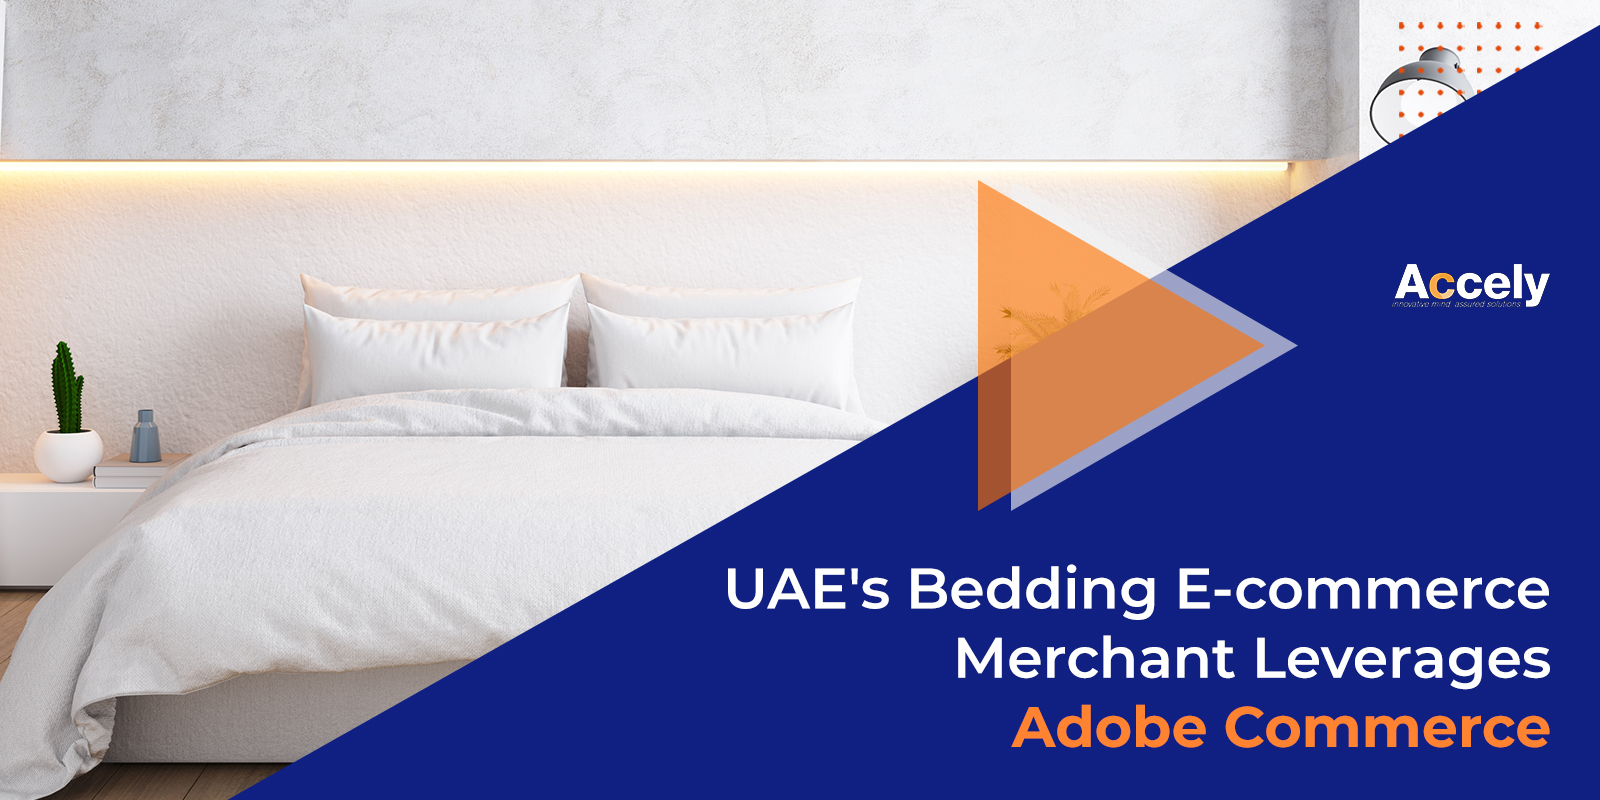 UAE's Bedding E-commerce Merchant Leverages Adobe Commerce